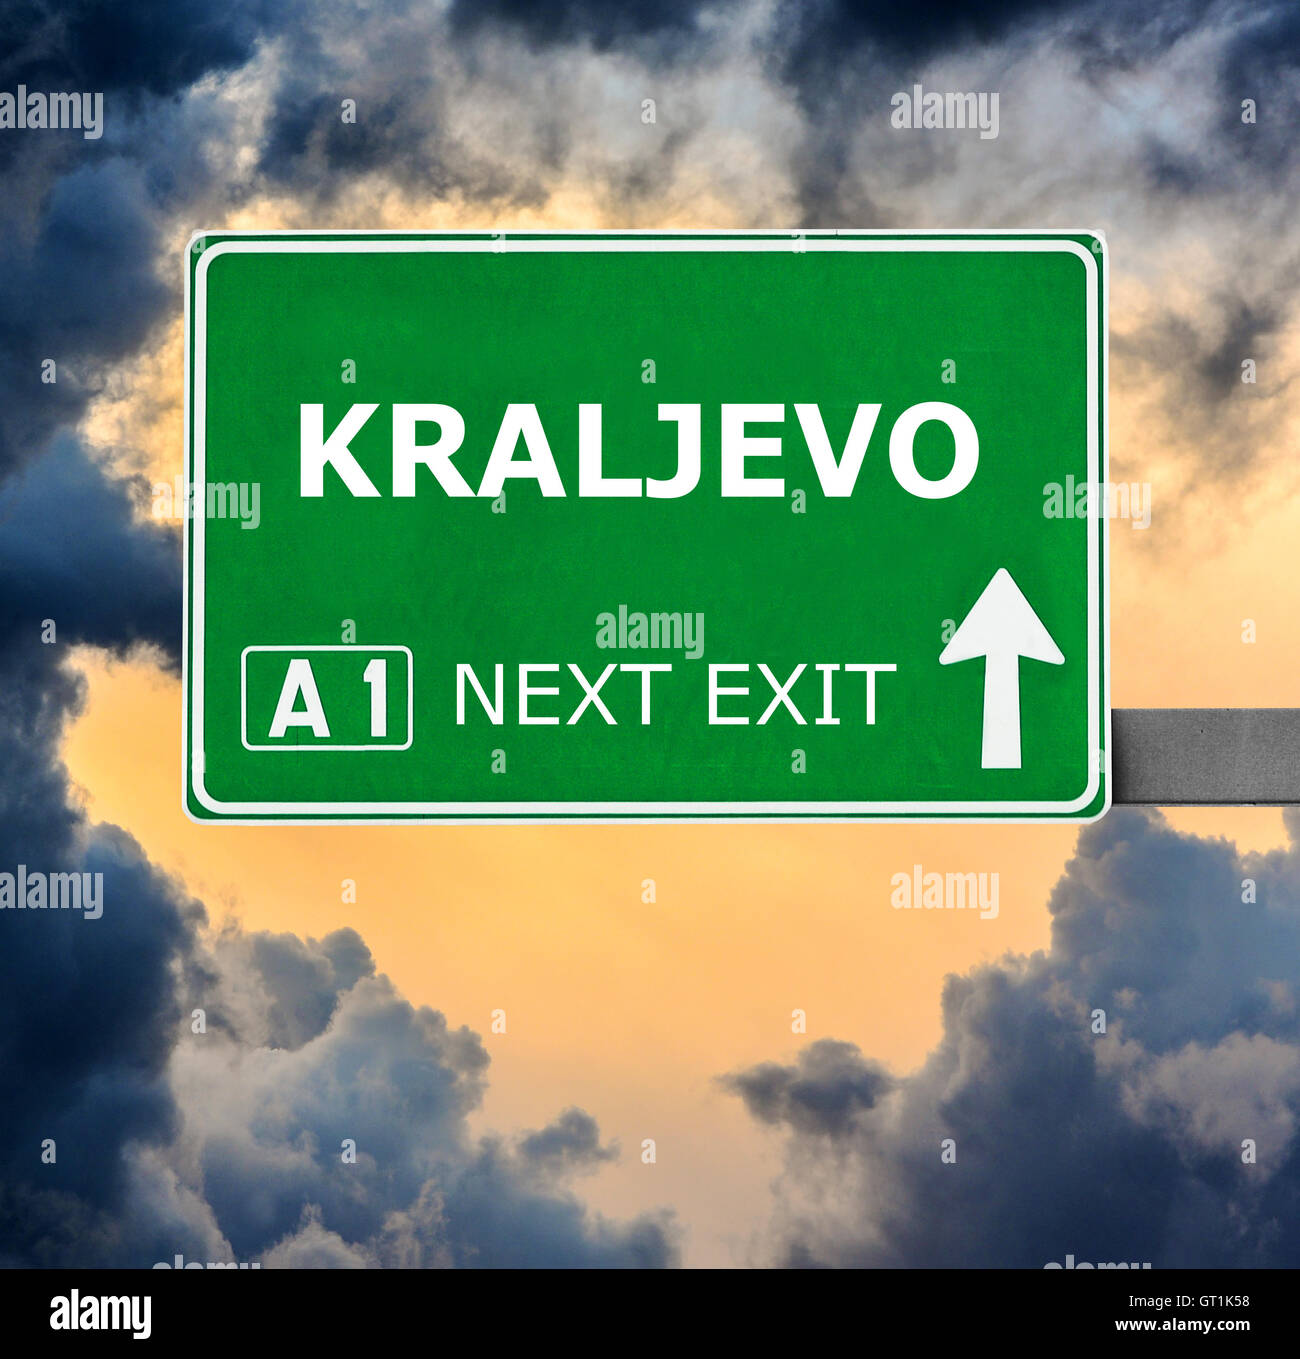 KRALJEVO road sign against clear blue sky Stock Photo